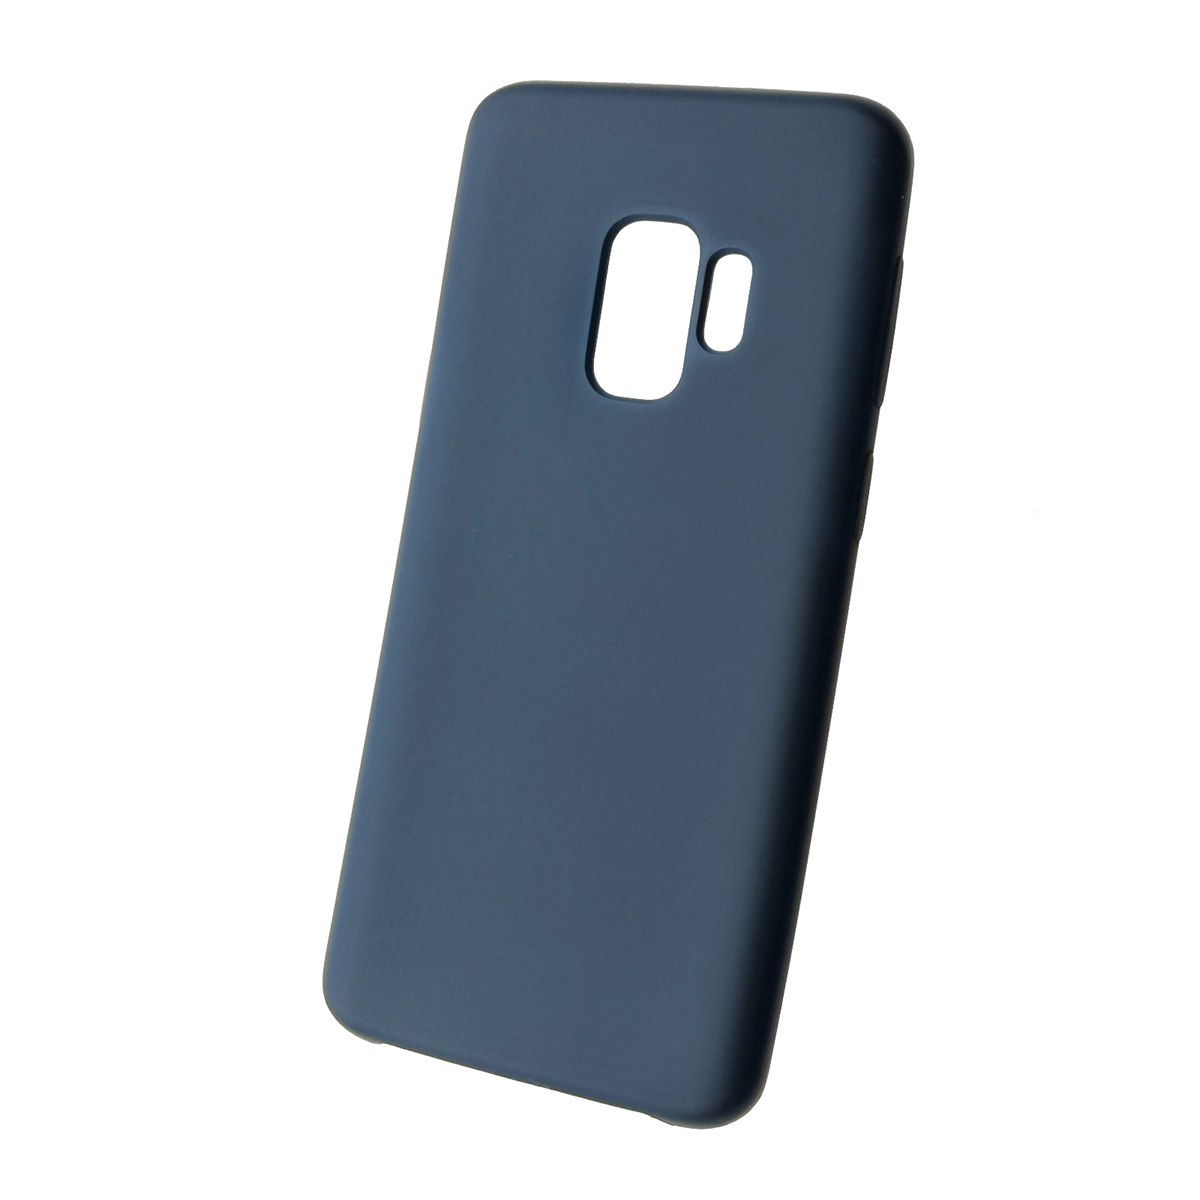 Чехол накладка Silicon Cover для SAMSUNG Galaxy S9 (SM-G960), силикон, бархат, цвет синий кобальт.